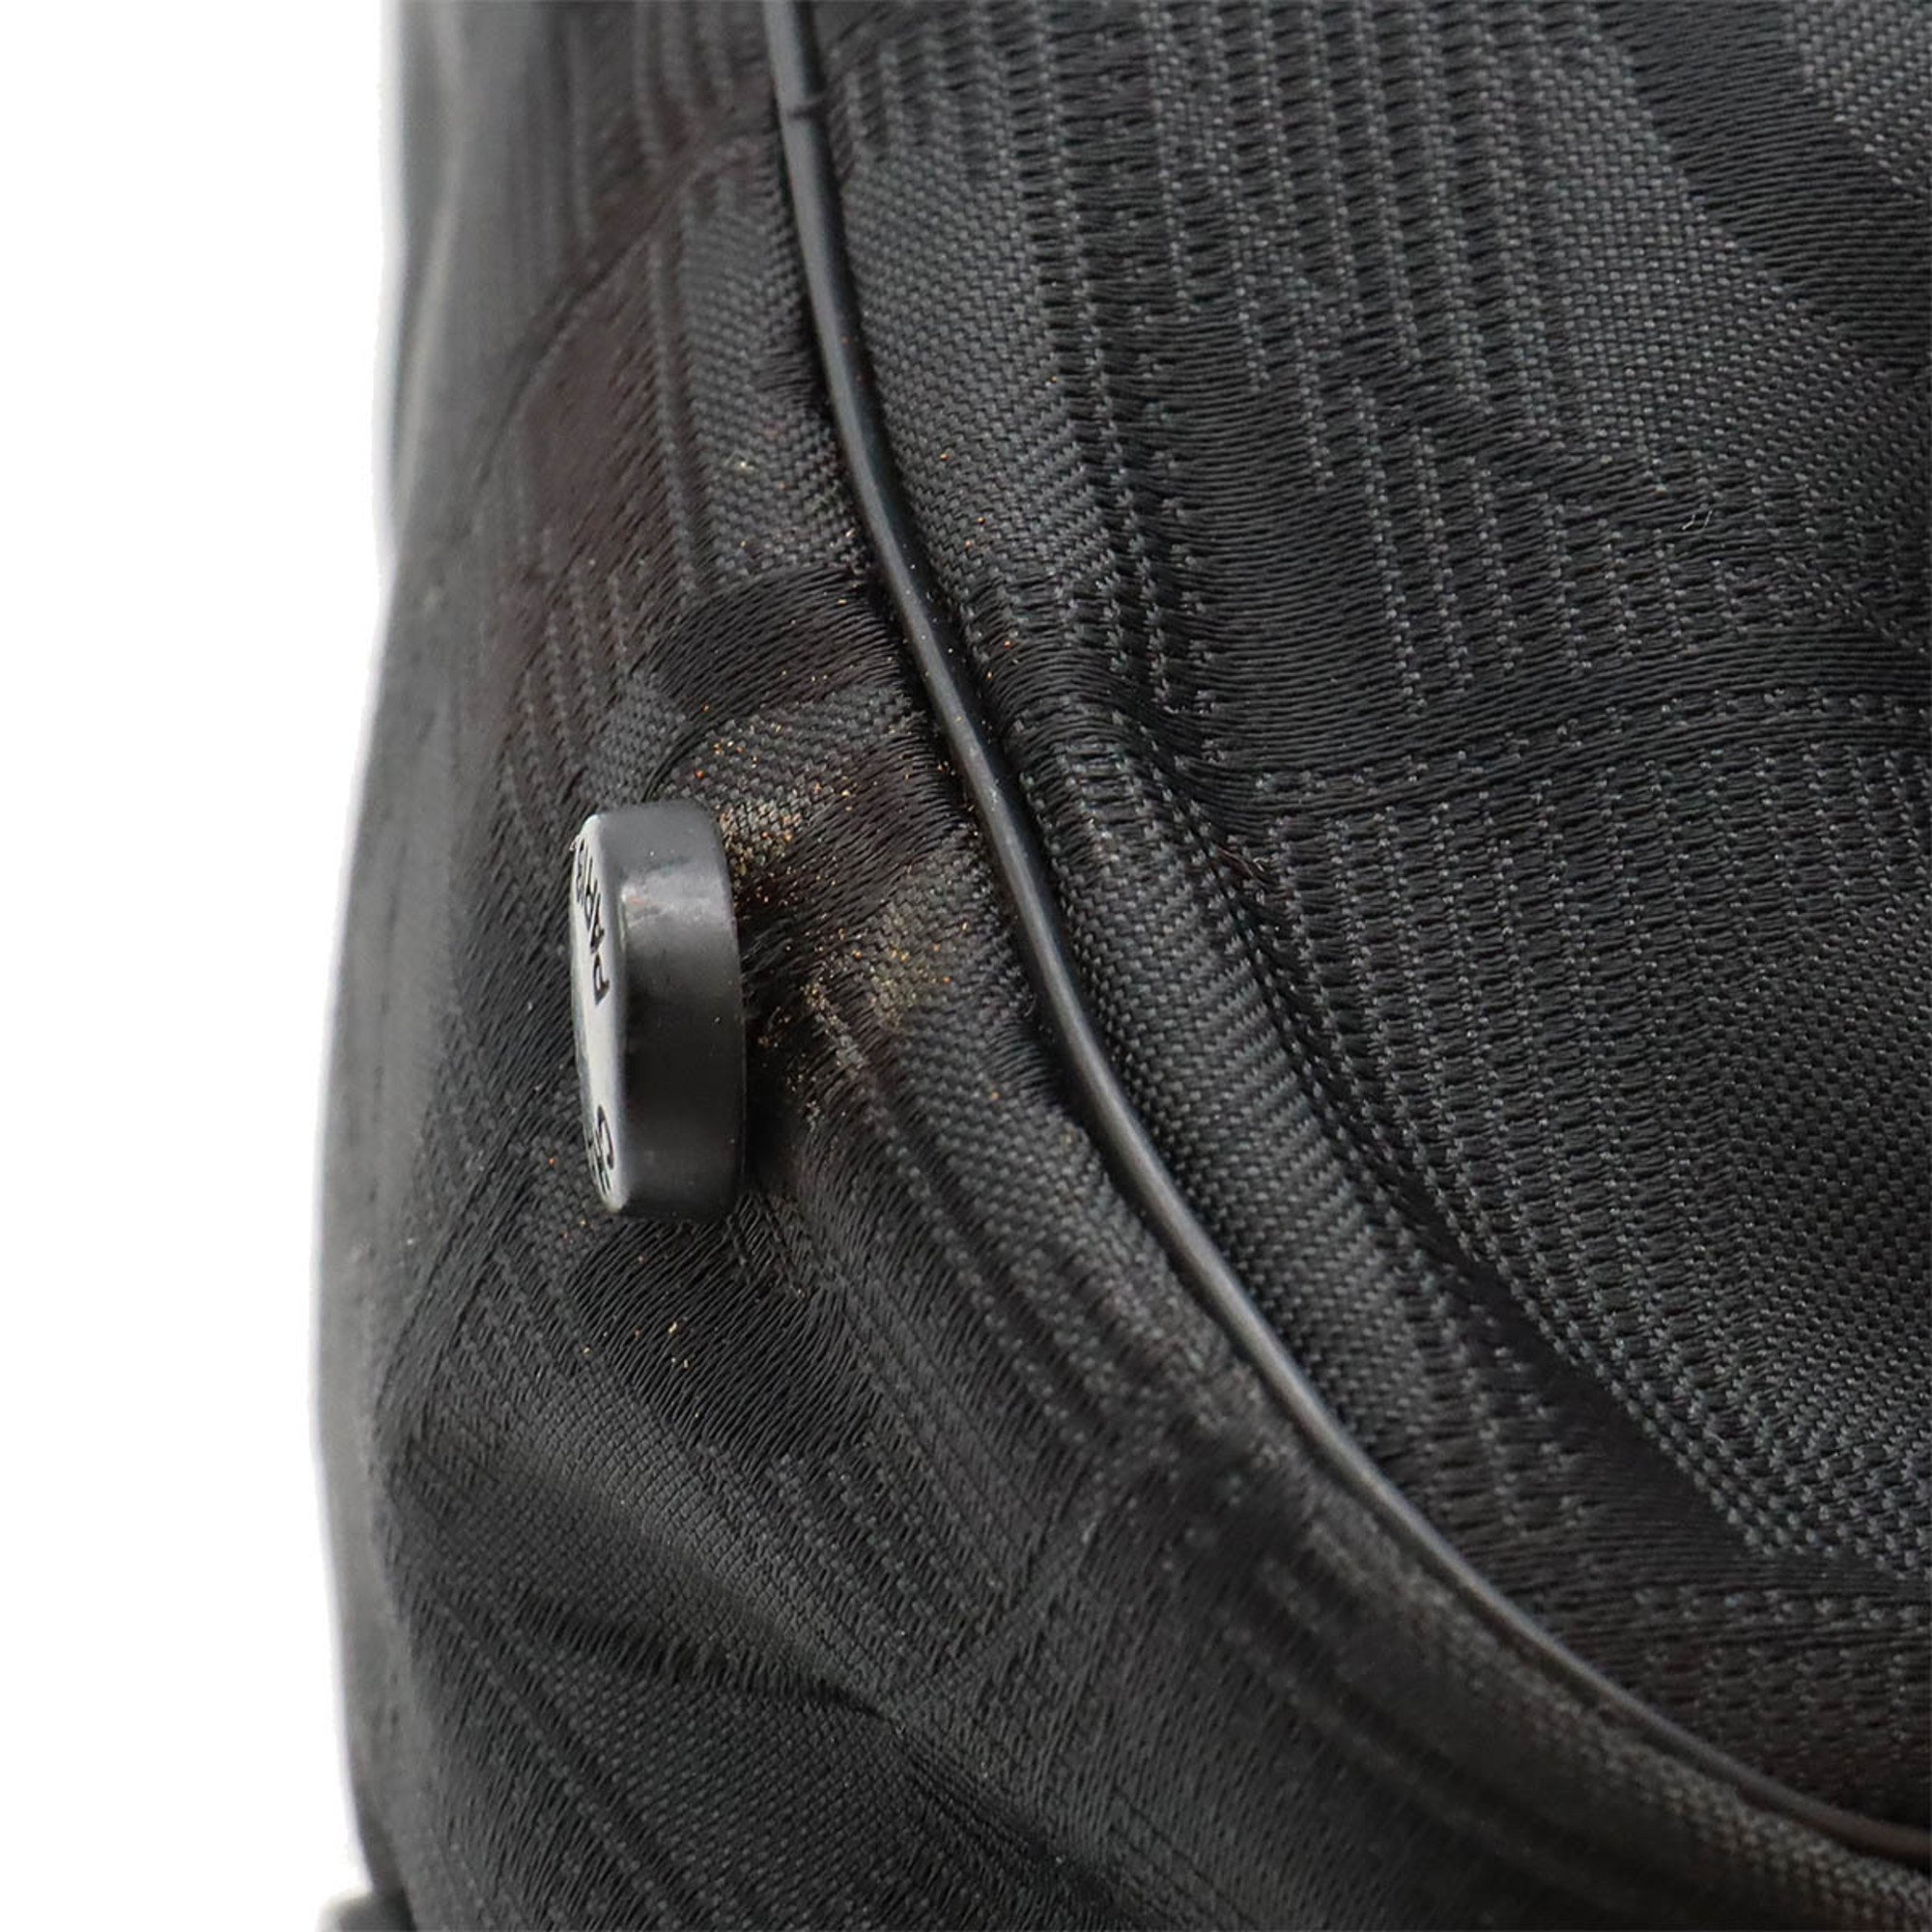 CHANEL New Travel Line Handbag Tote Bag Nylon Jacquard Leather Black A15970